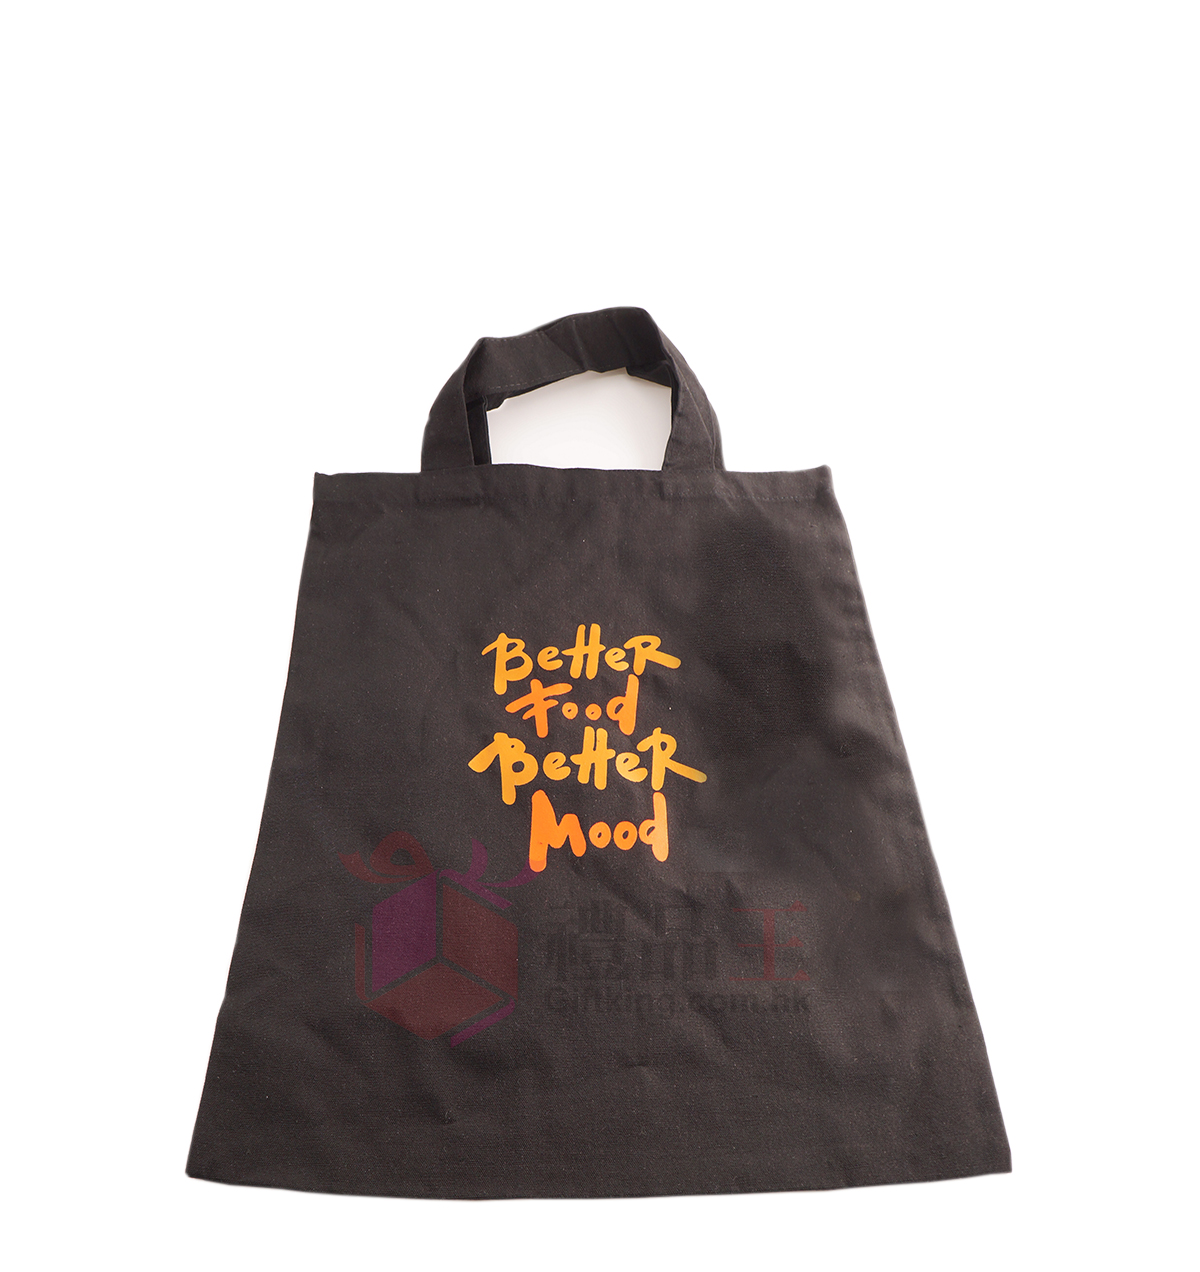 Better Food Better Mood Canvas Shopping Bag (Advertising Gift)